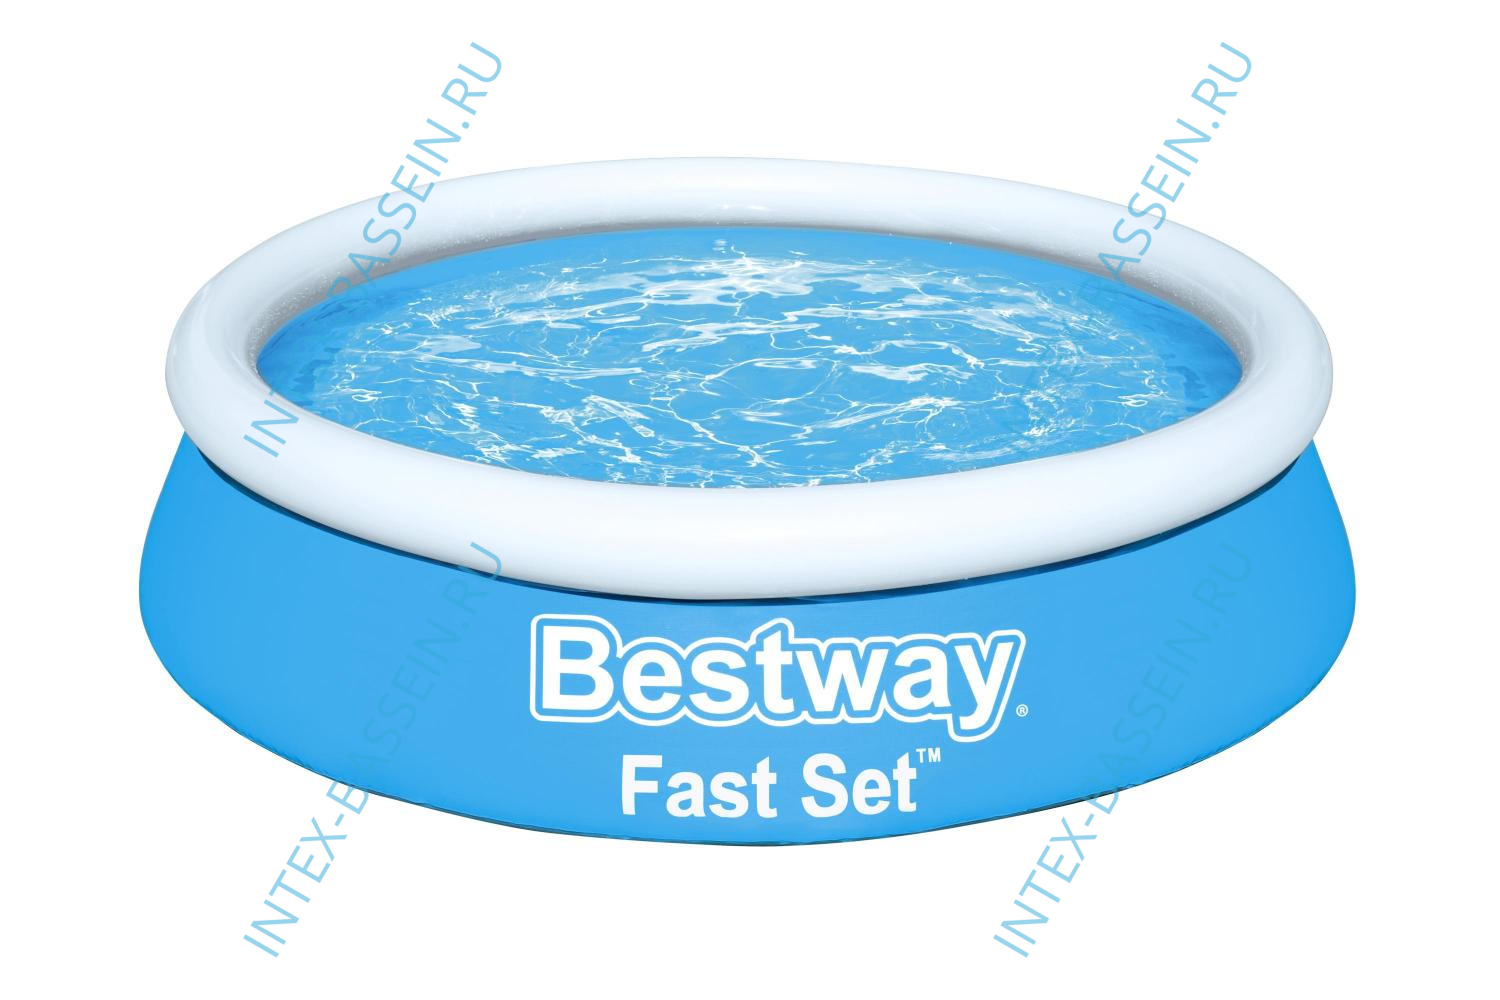 Надувной бассейн Bestway Fast Set 1.83 x 0.51 м, артикул 57392